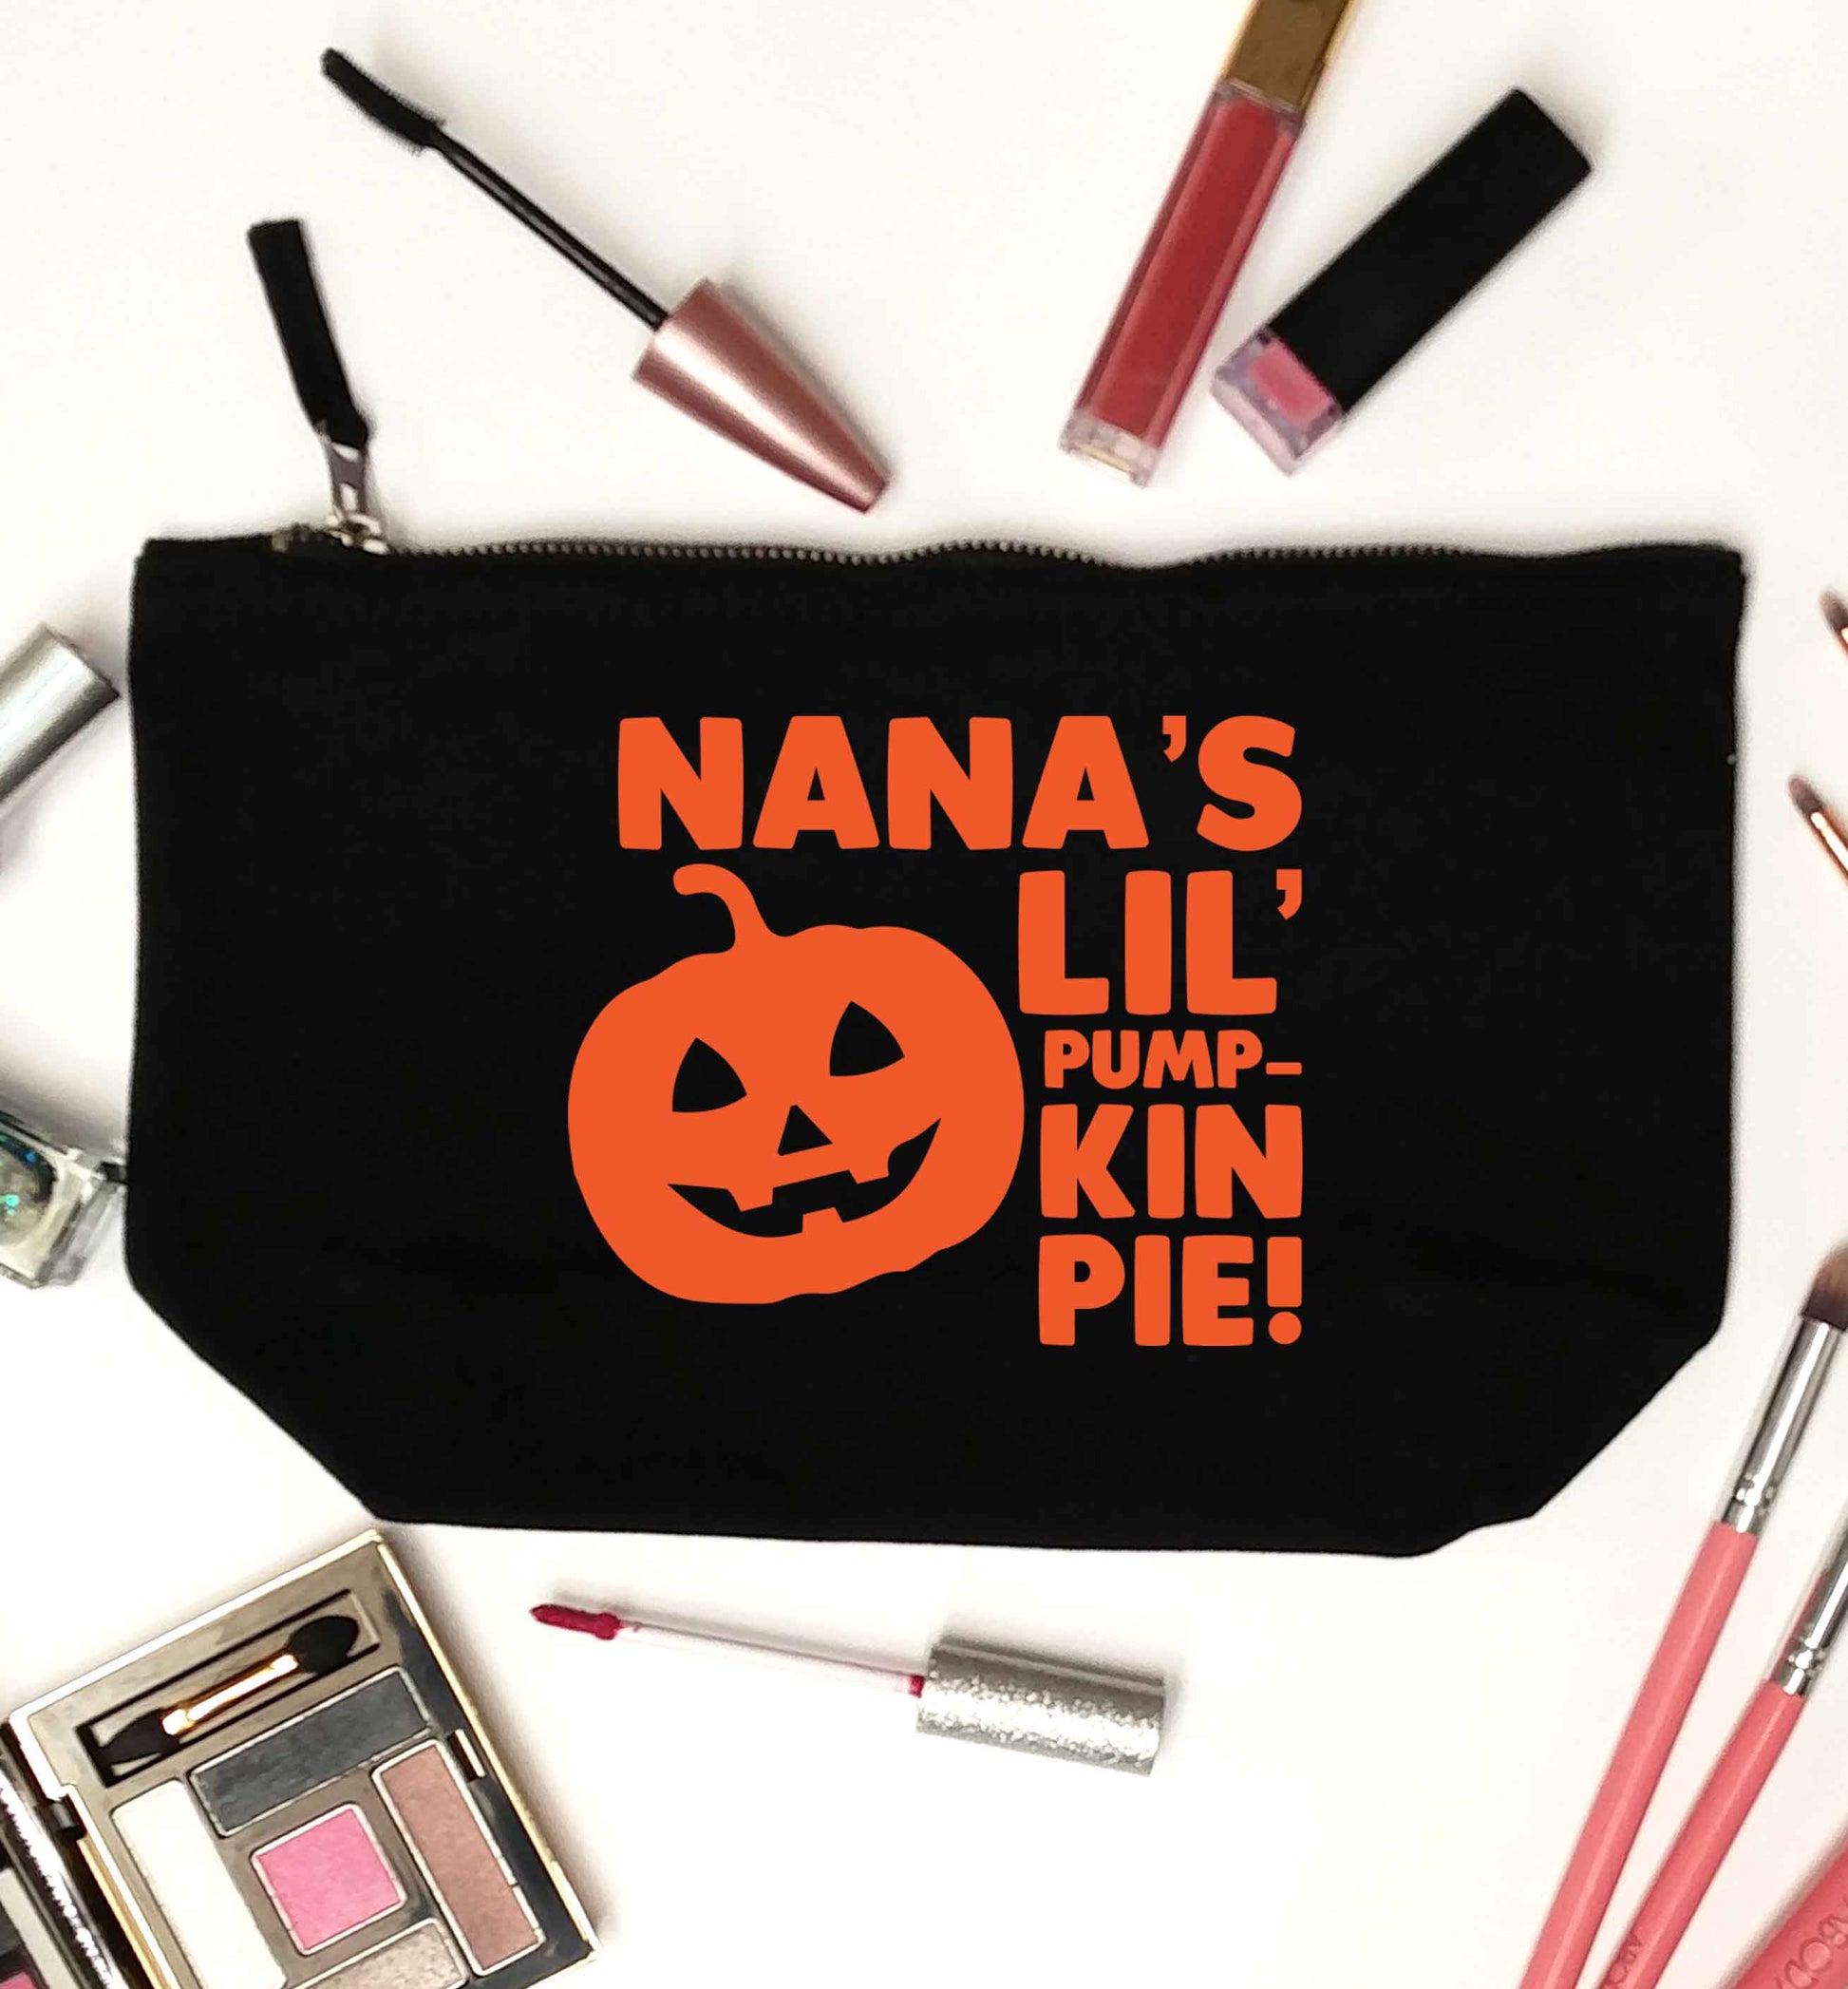 Nana's lil' pumpkin pie black makeup bag